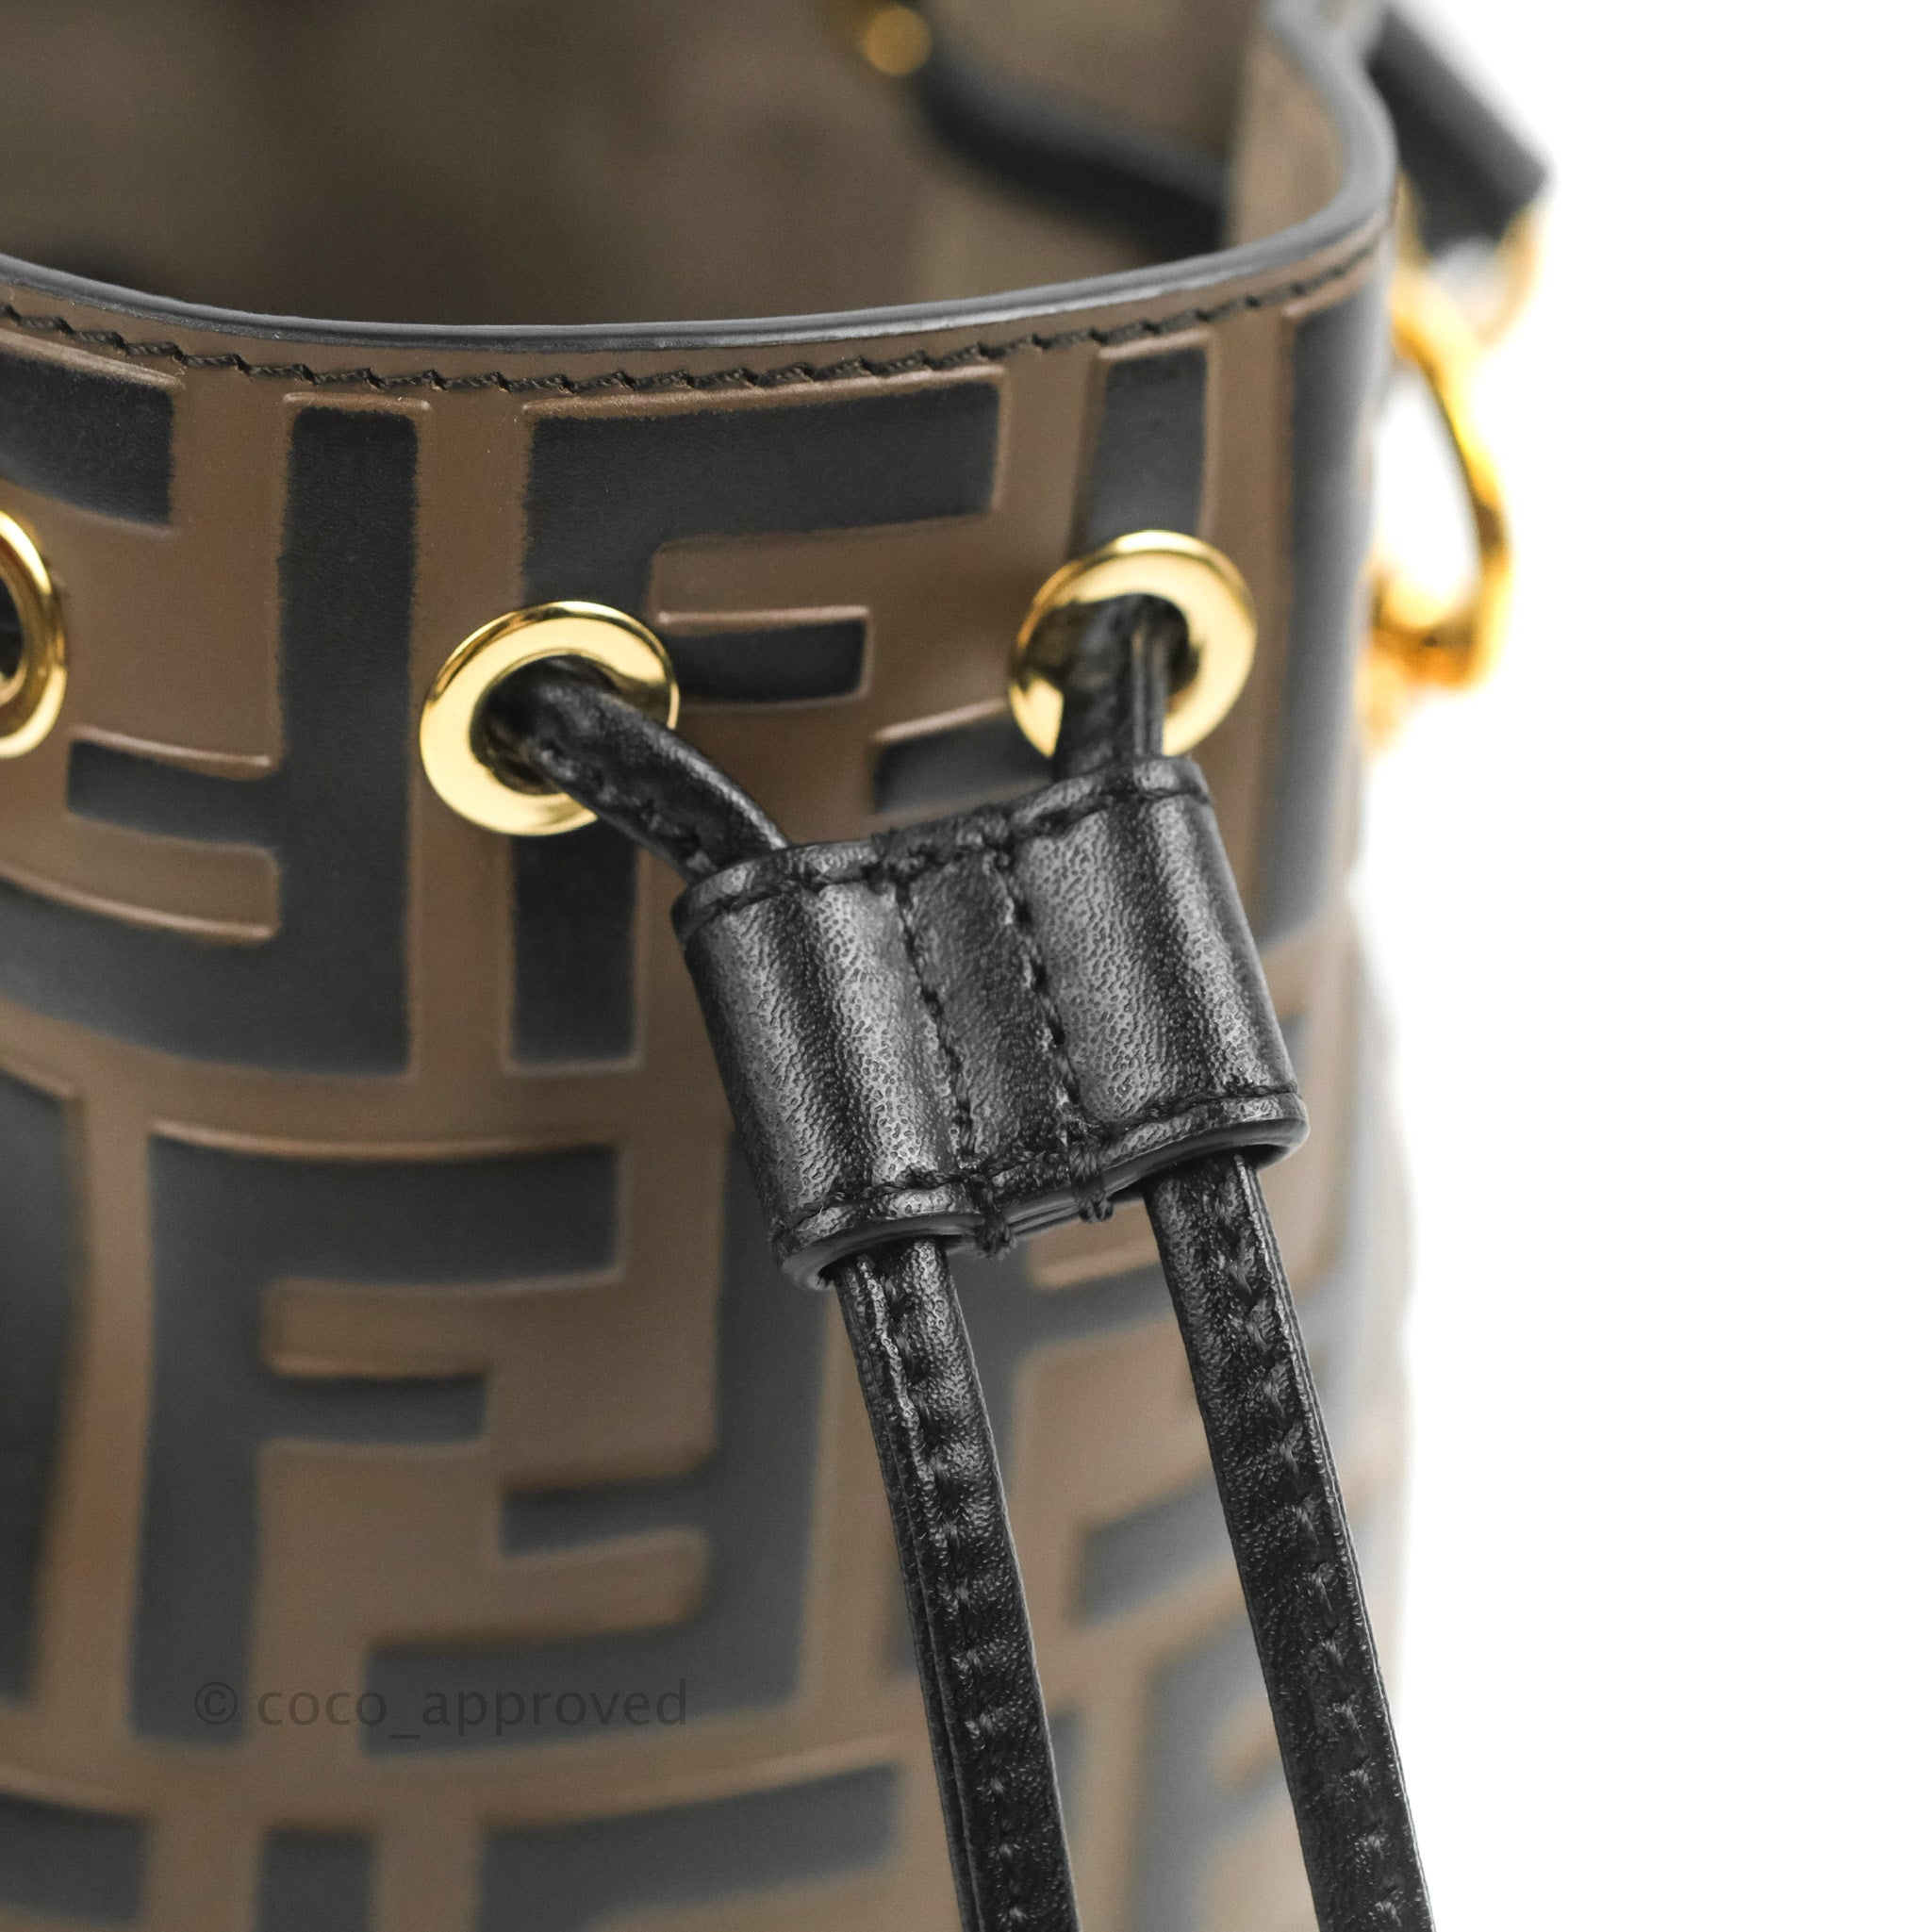 Fendi Mini Mon Tresor Bucket Bag FF Motif Brown – Coco Approved Studio